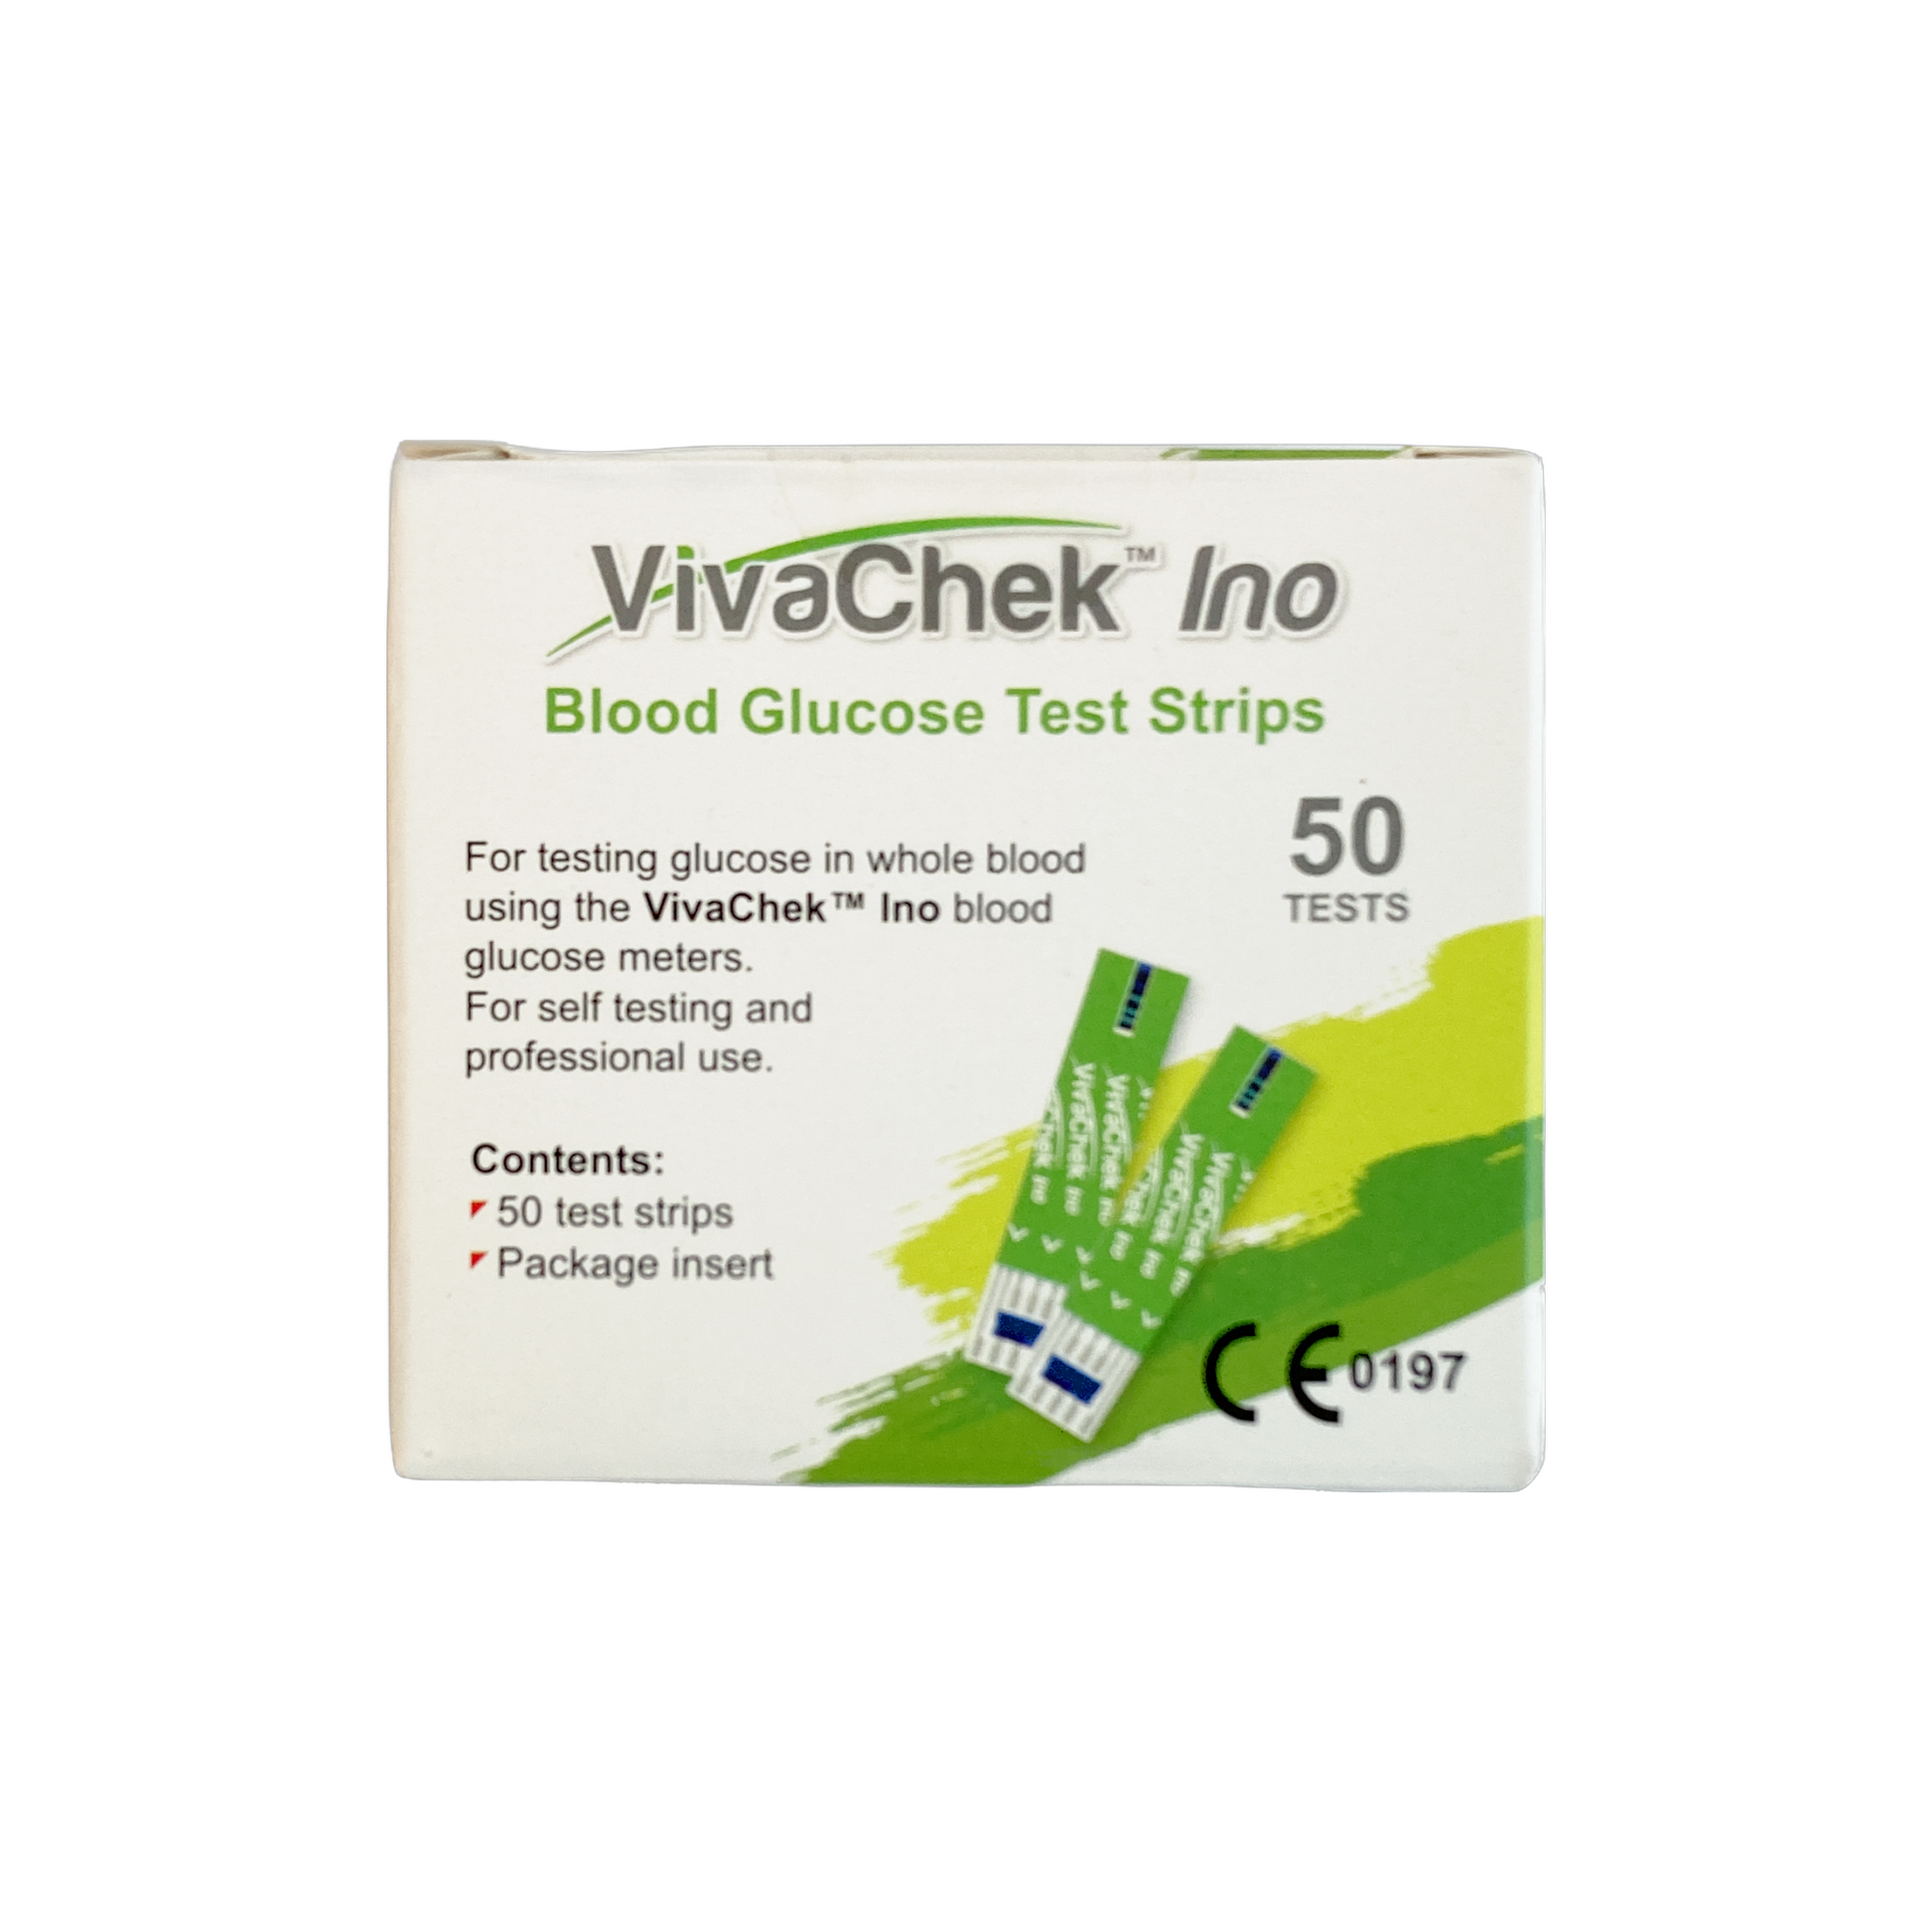 VivaChek Ino Blood Glucose Test Strips (50 strips)